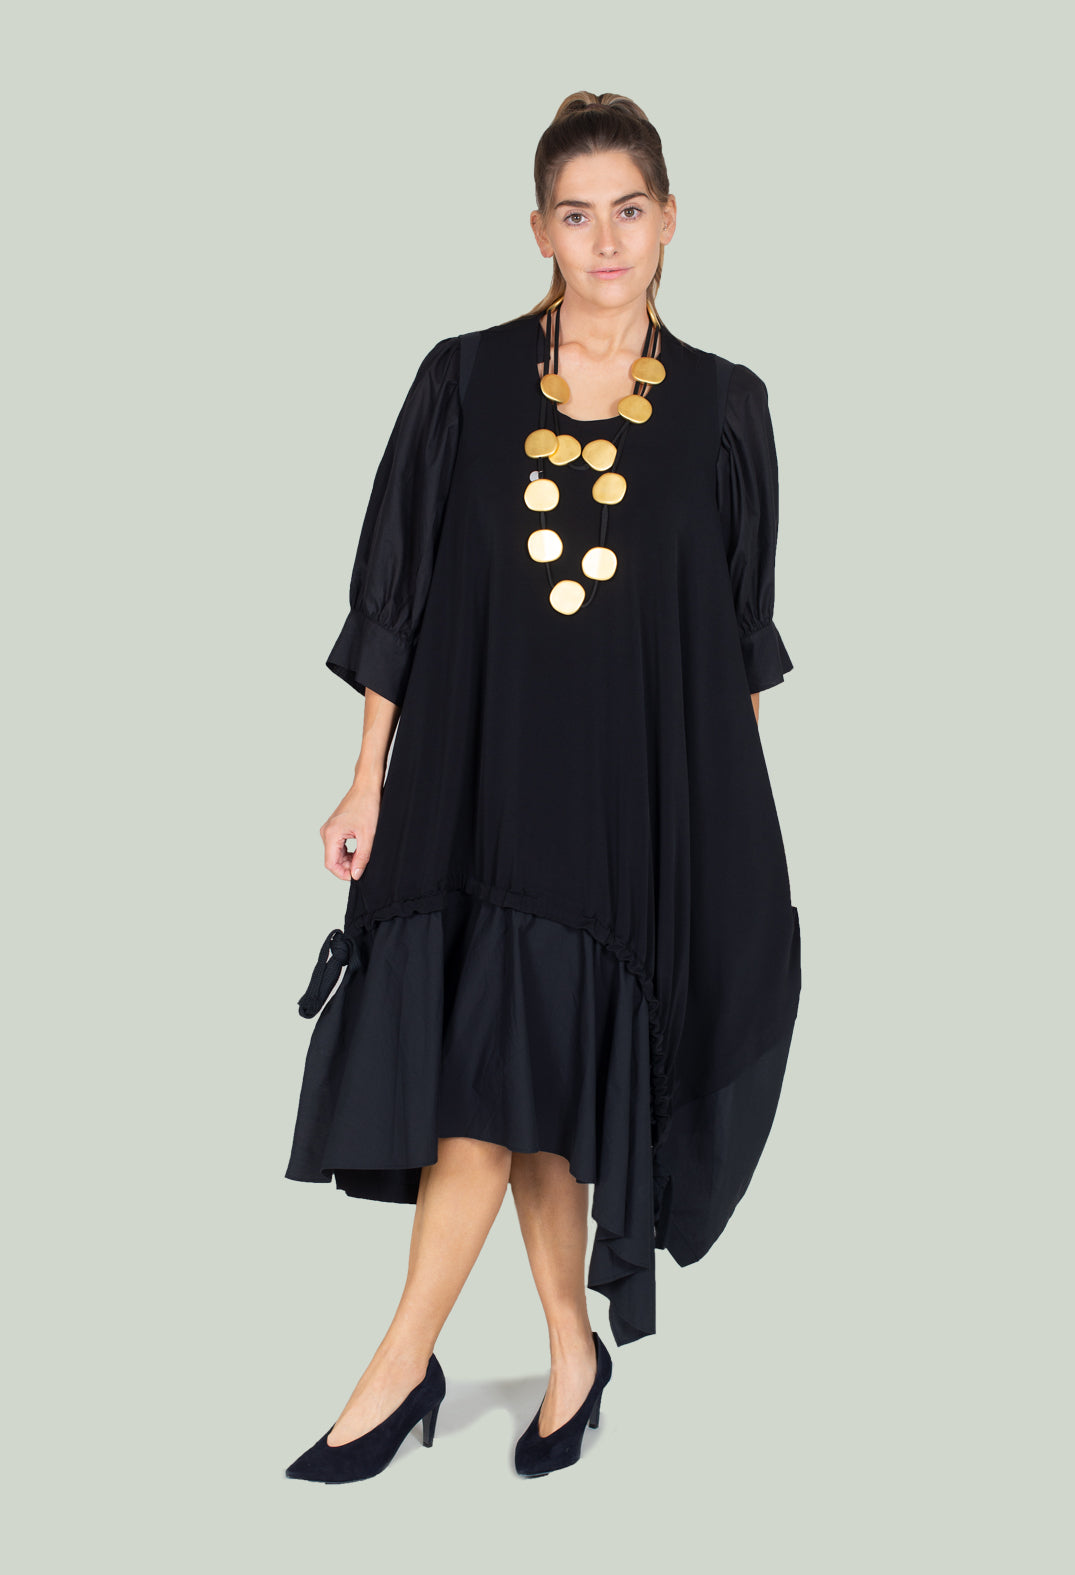 Sleeveless Dress in Black